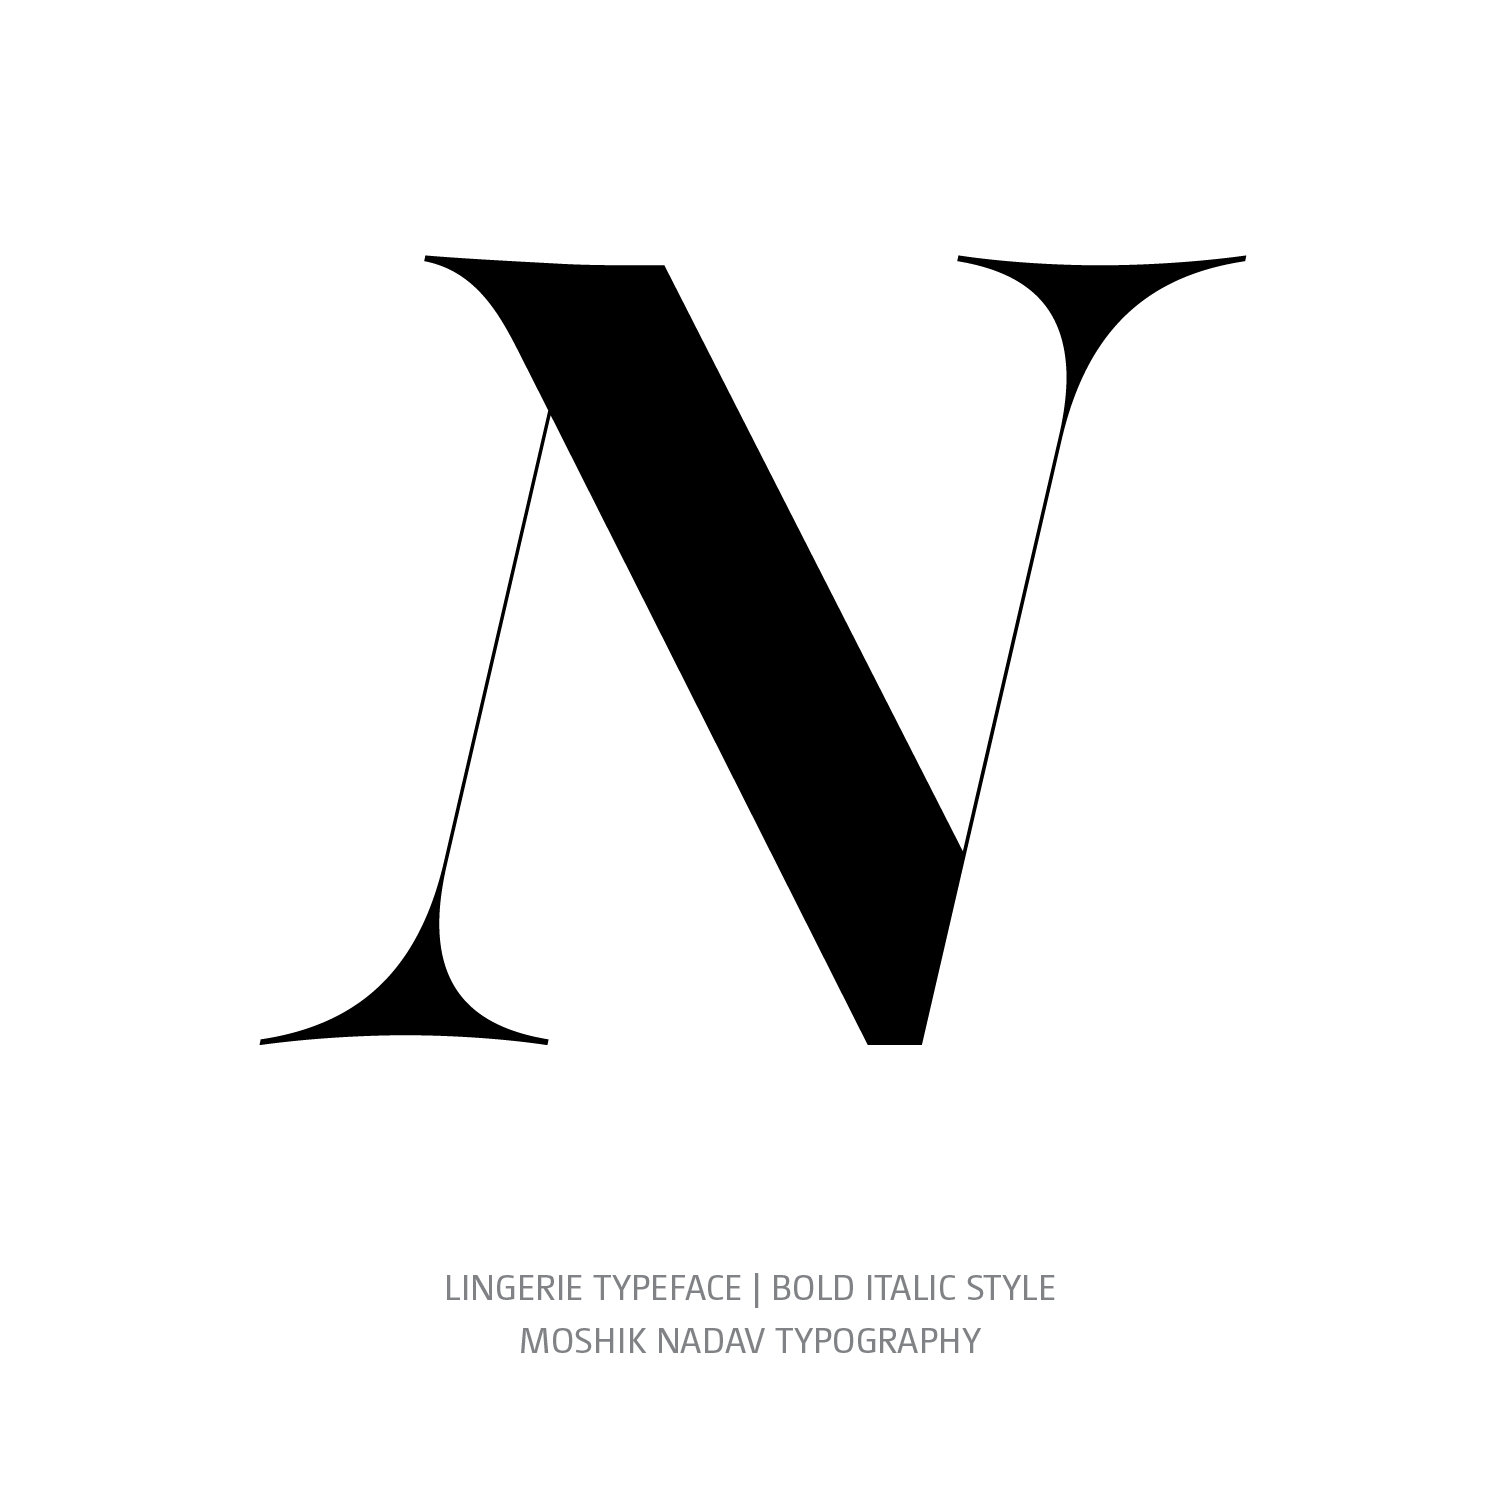 Lingerie Typeface Bold Italic N